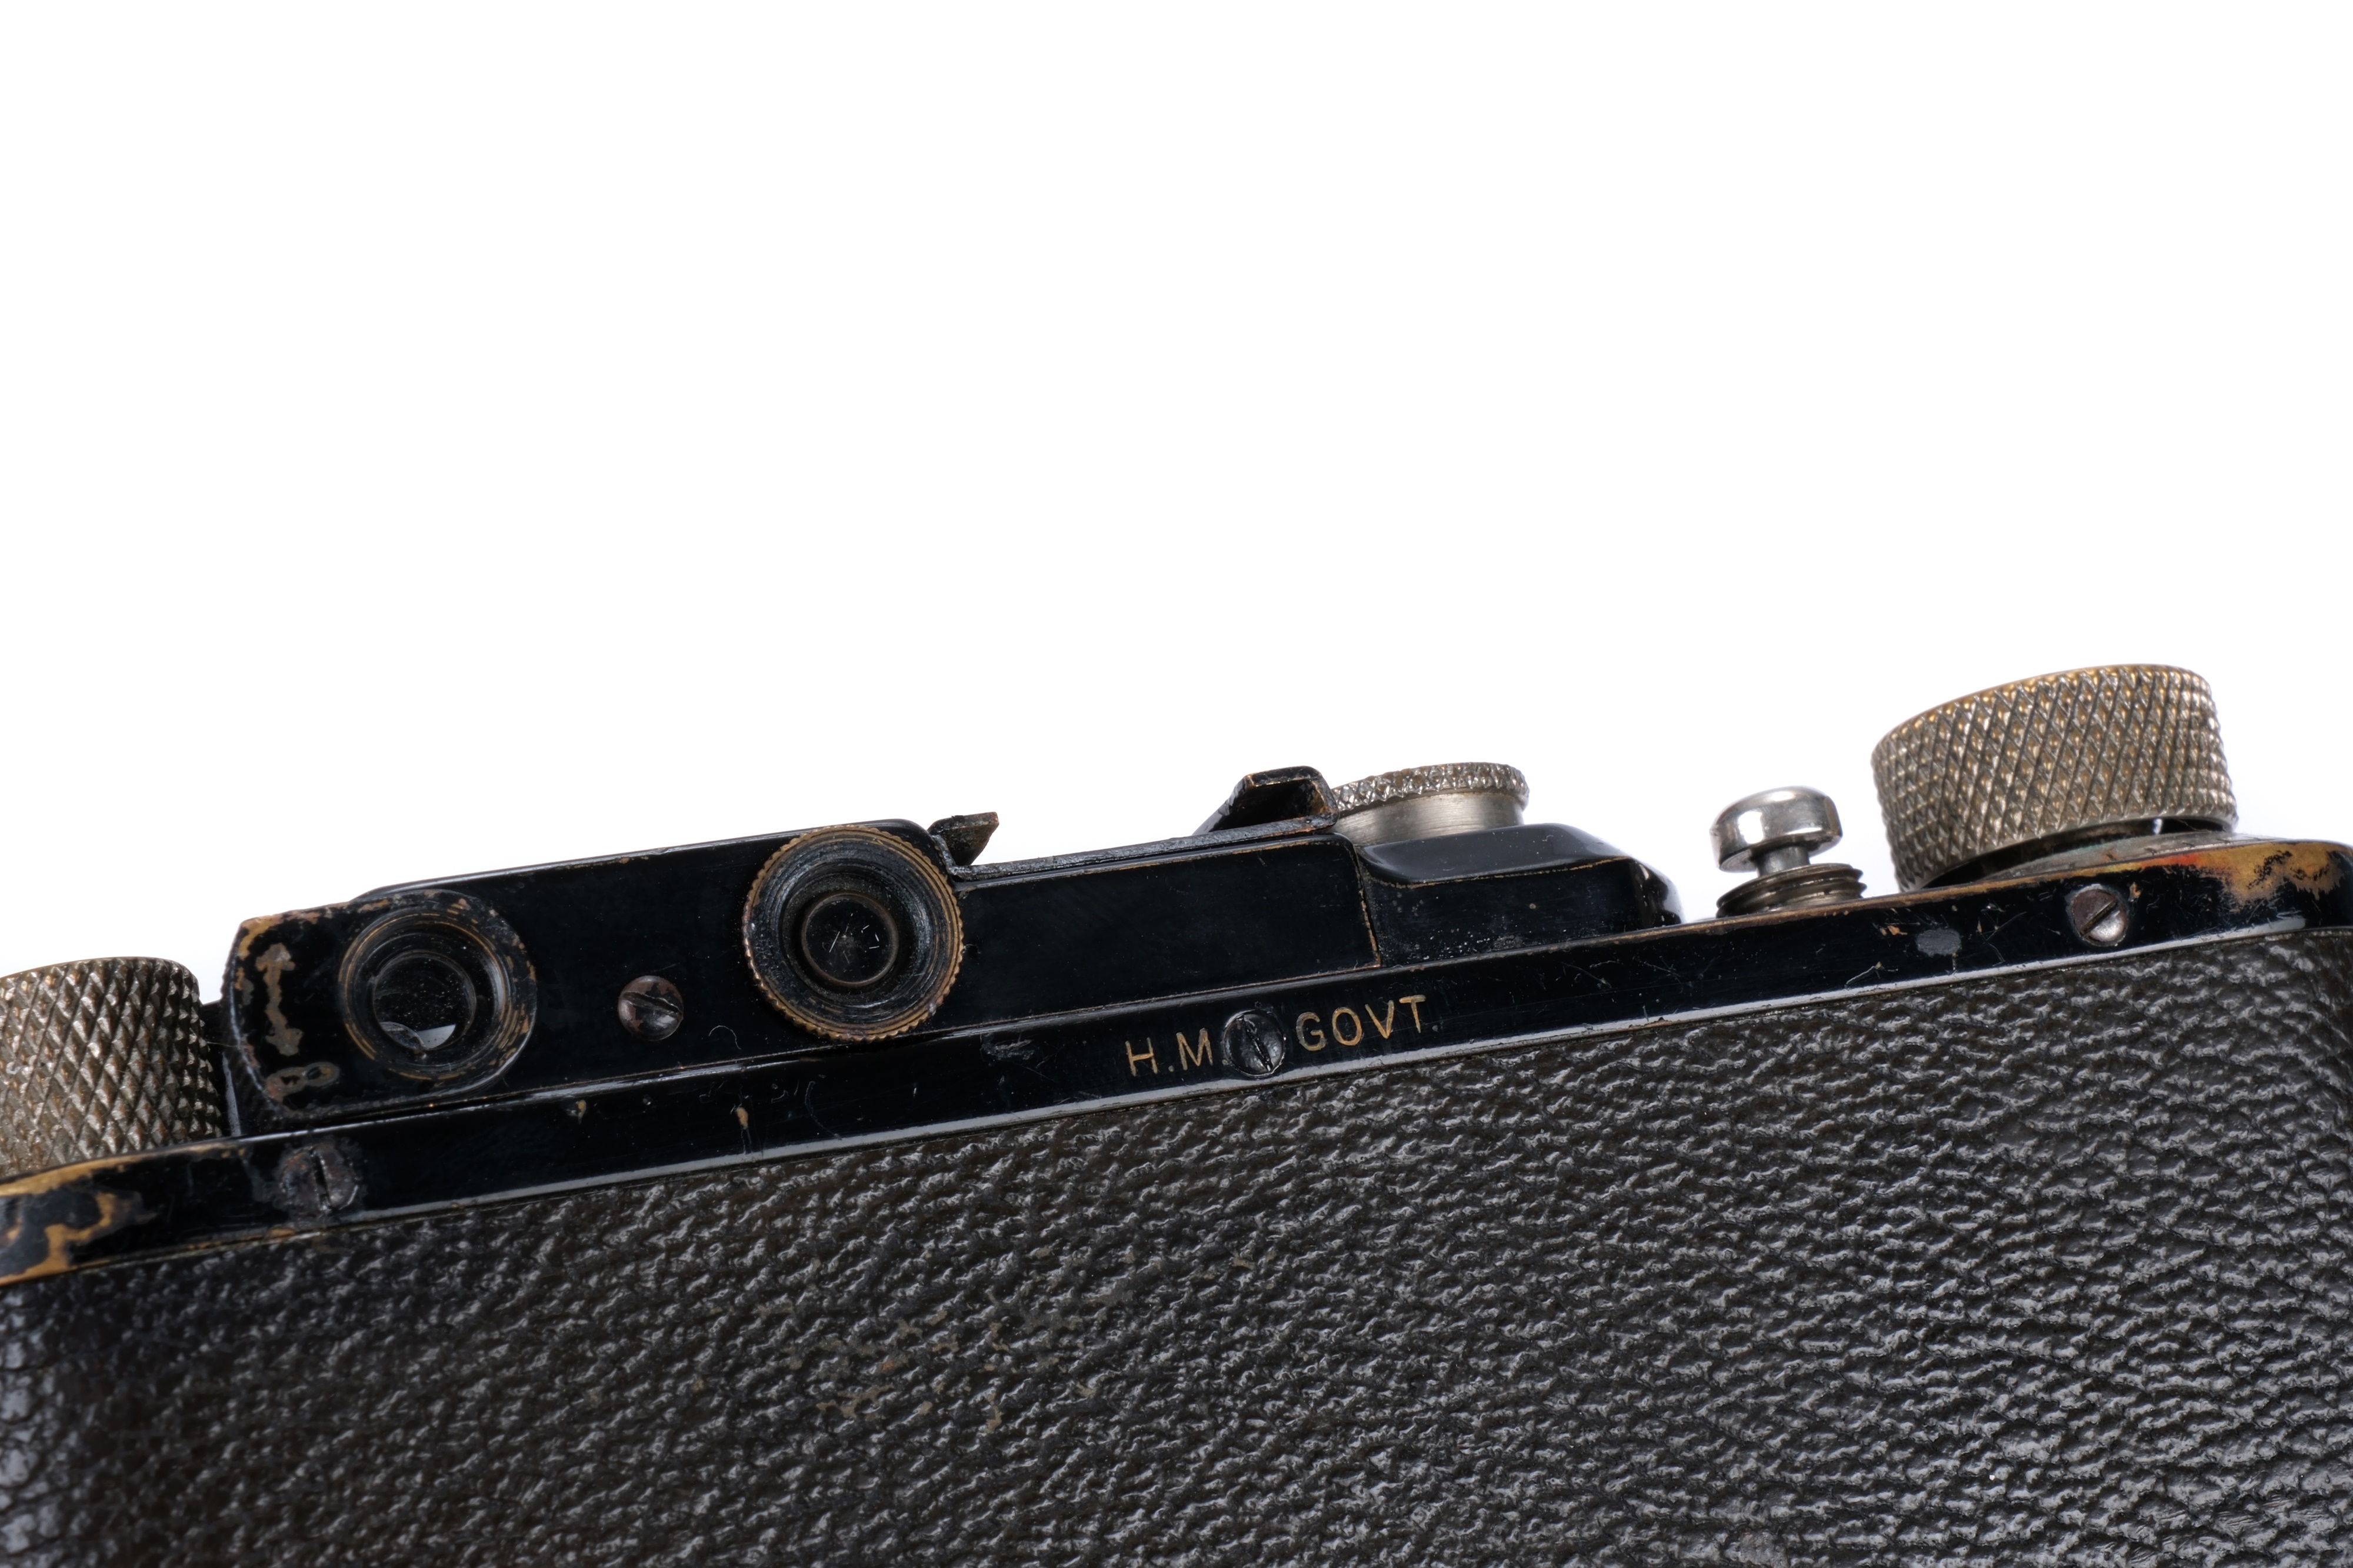 A Leica III 'H.M. Govt.' Rangefinder Camera, - Image 4 of 7